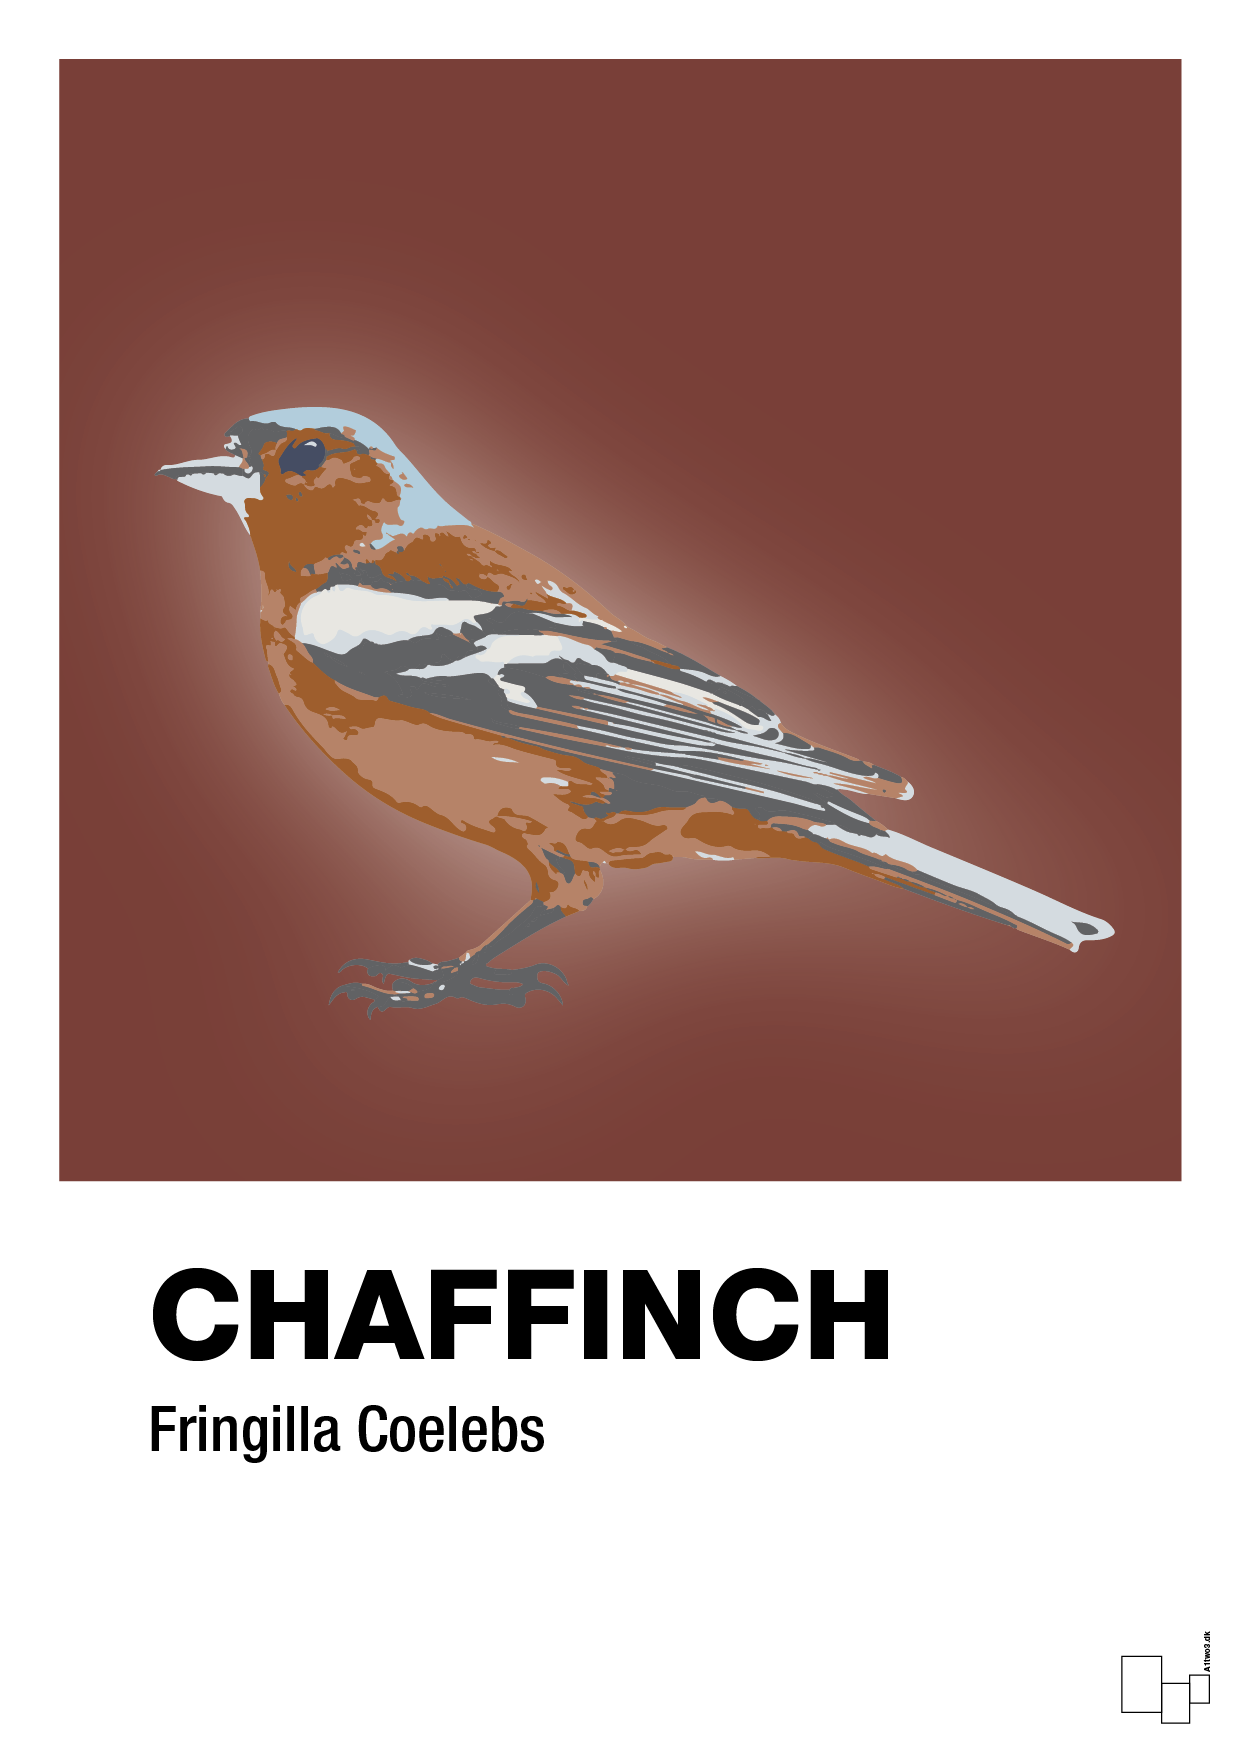 chaffinch - Plakat med Videnskab i Red Pepper